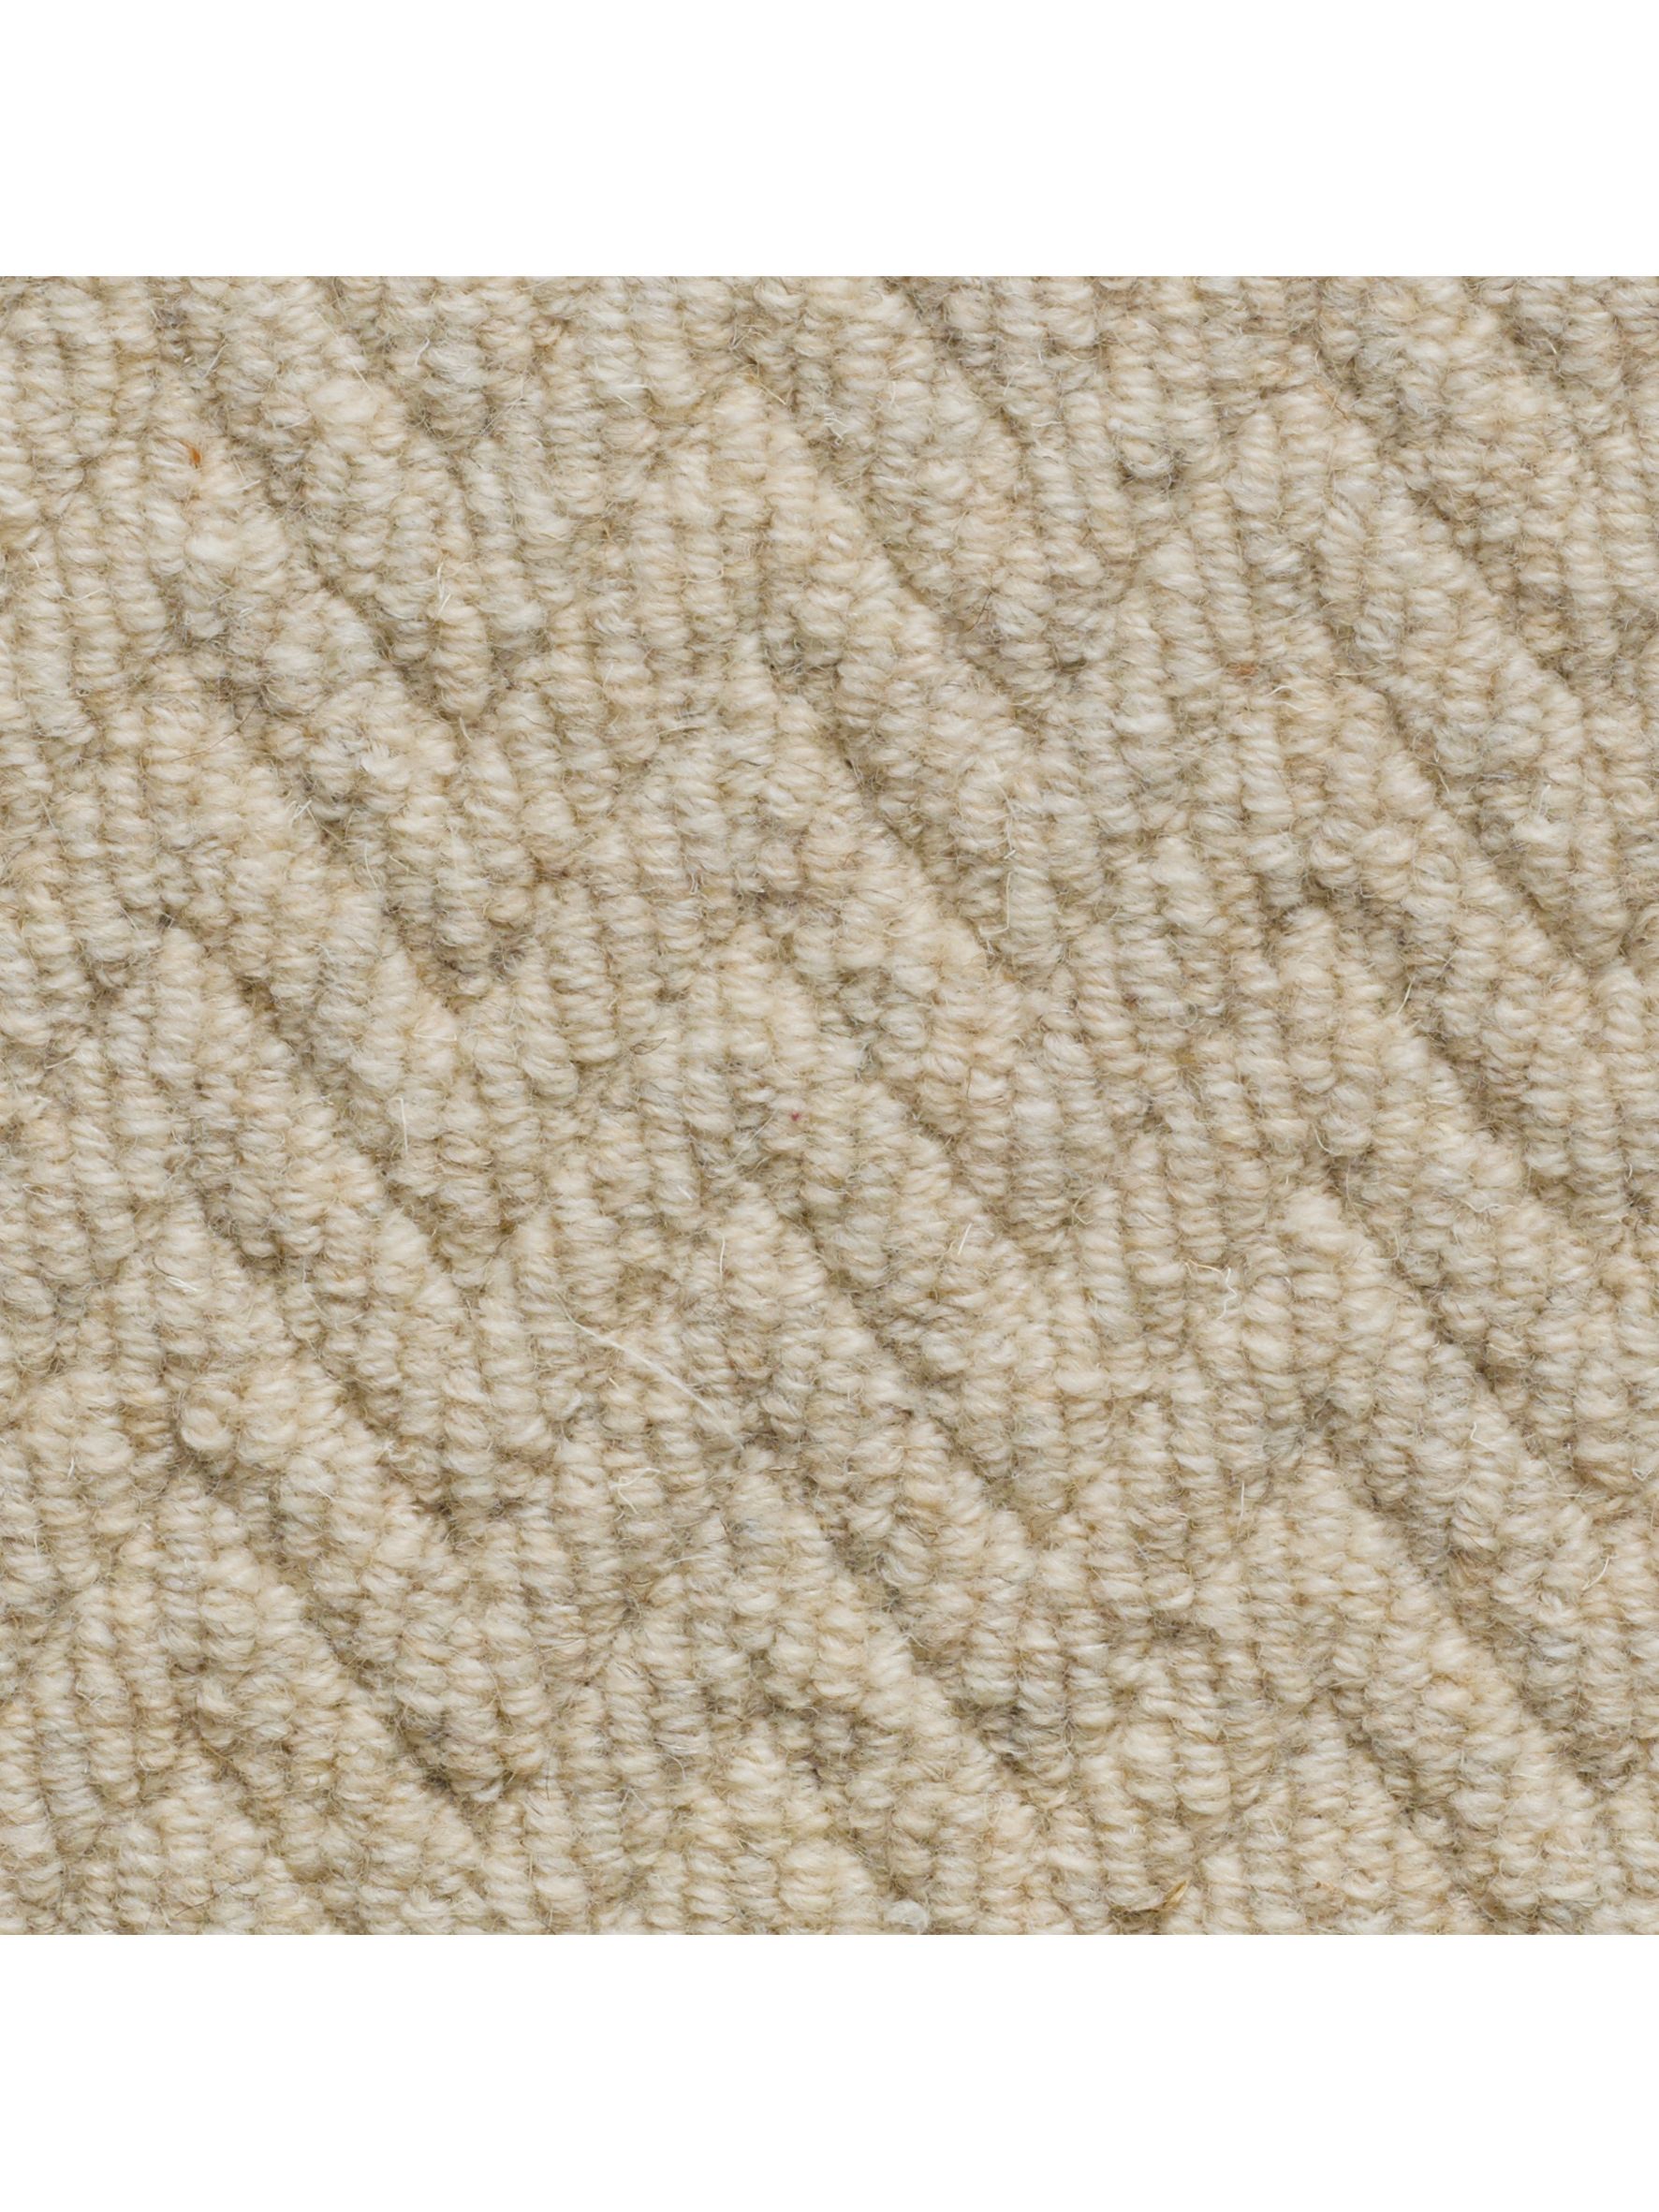 John Lewis Partners Herringbone Loop Carpet